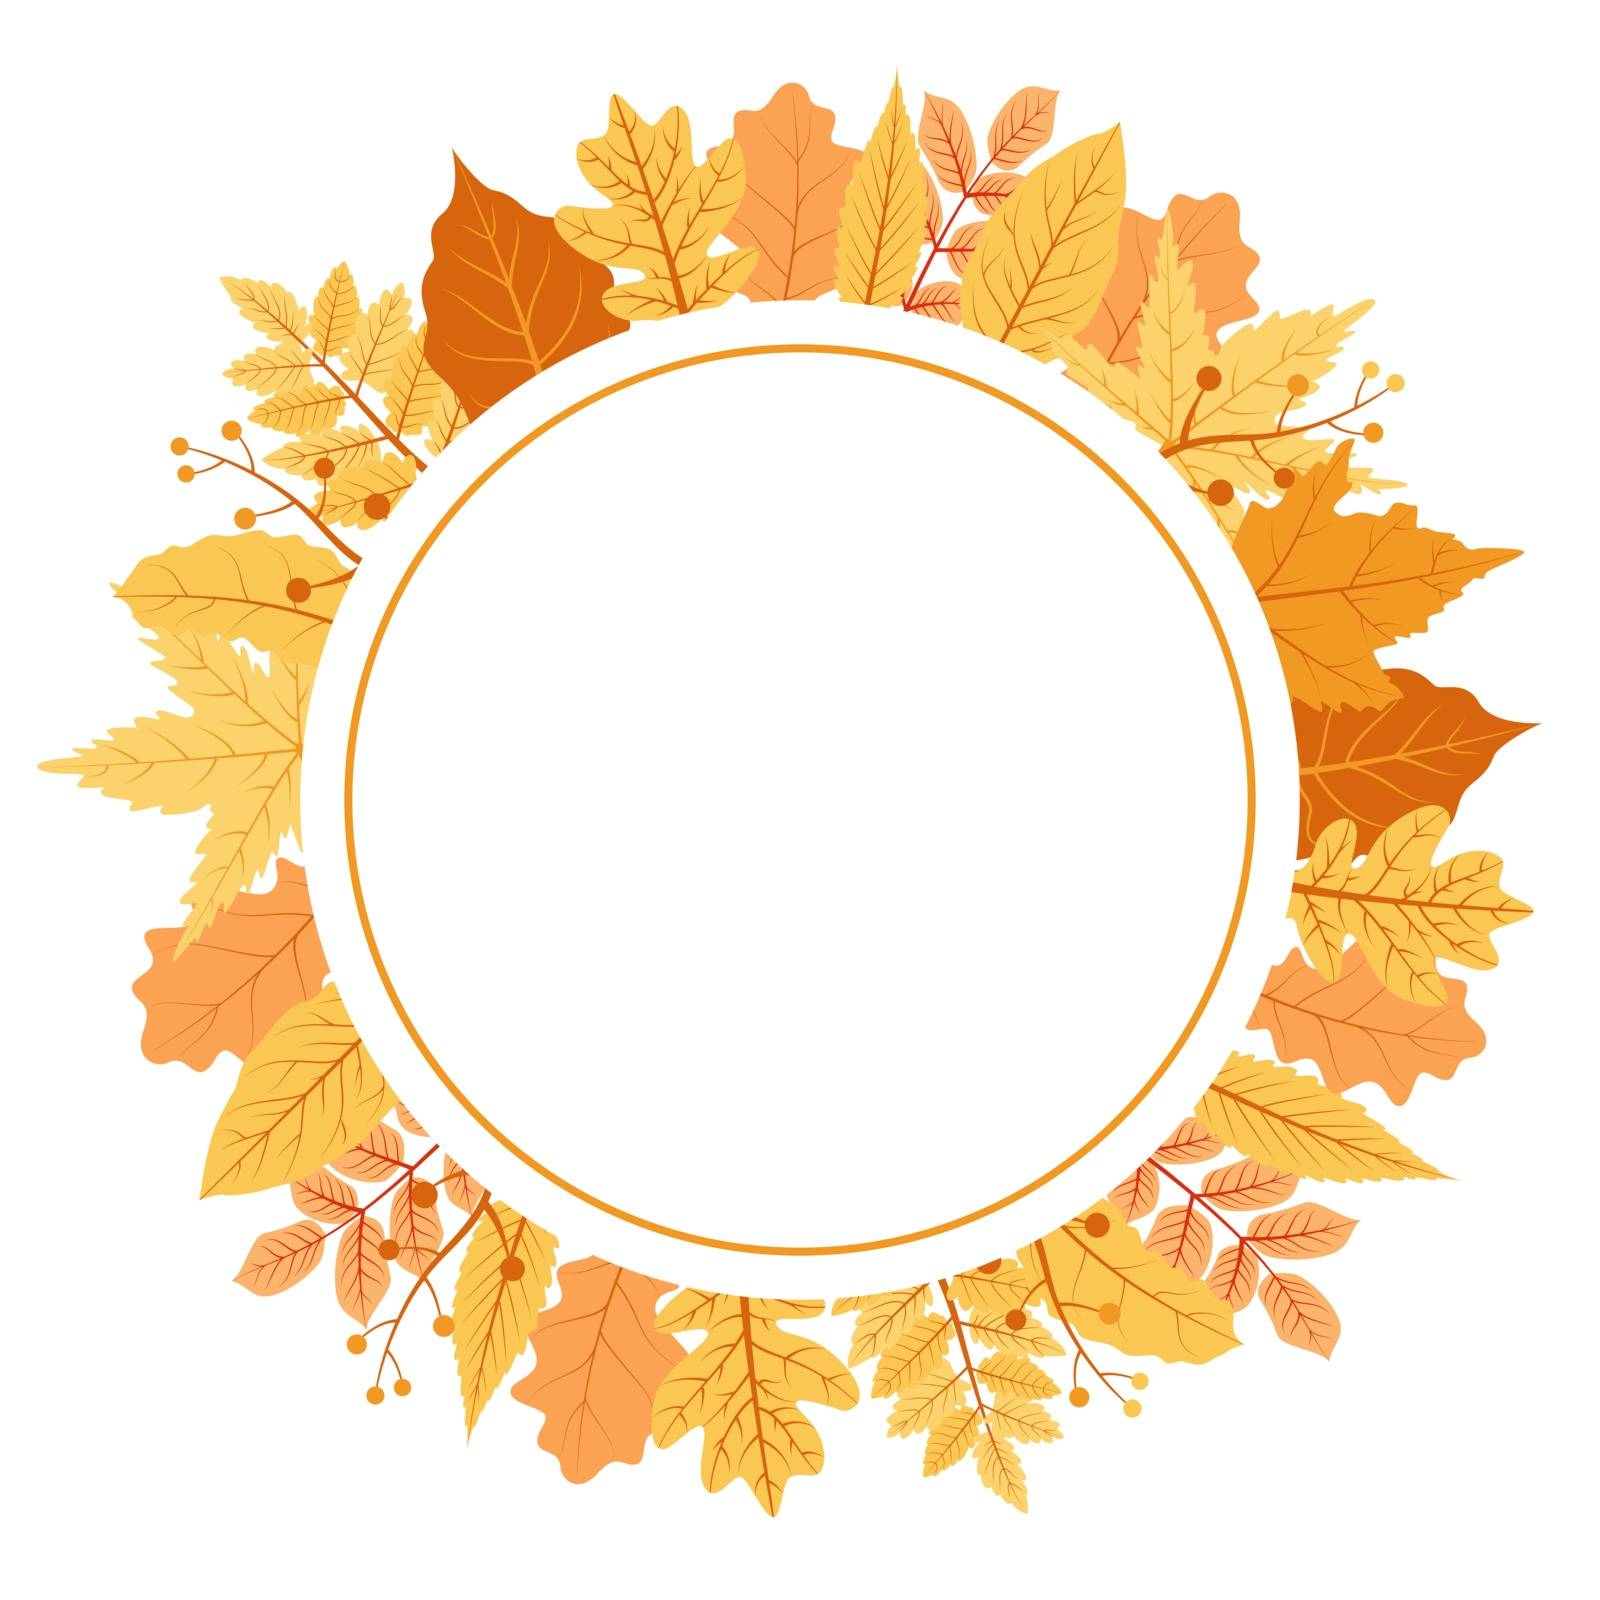 Autumn Fall Season Leaf Greeting Invitation Circle Frame Background Bouquet by jongcreative